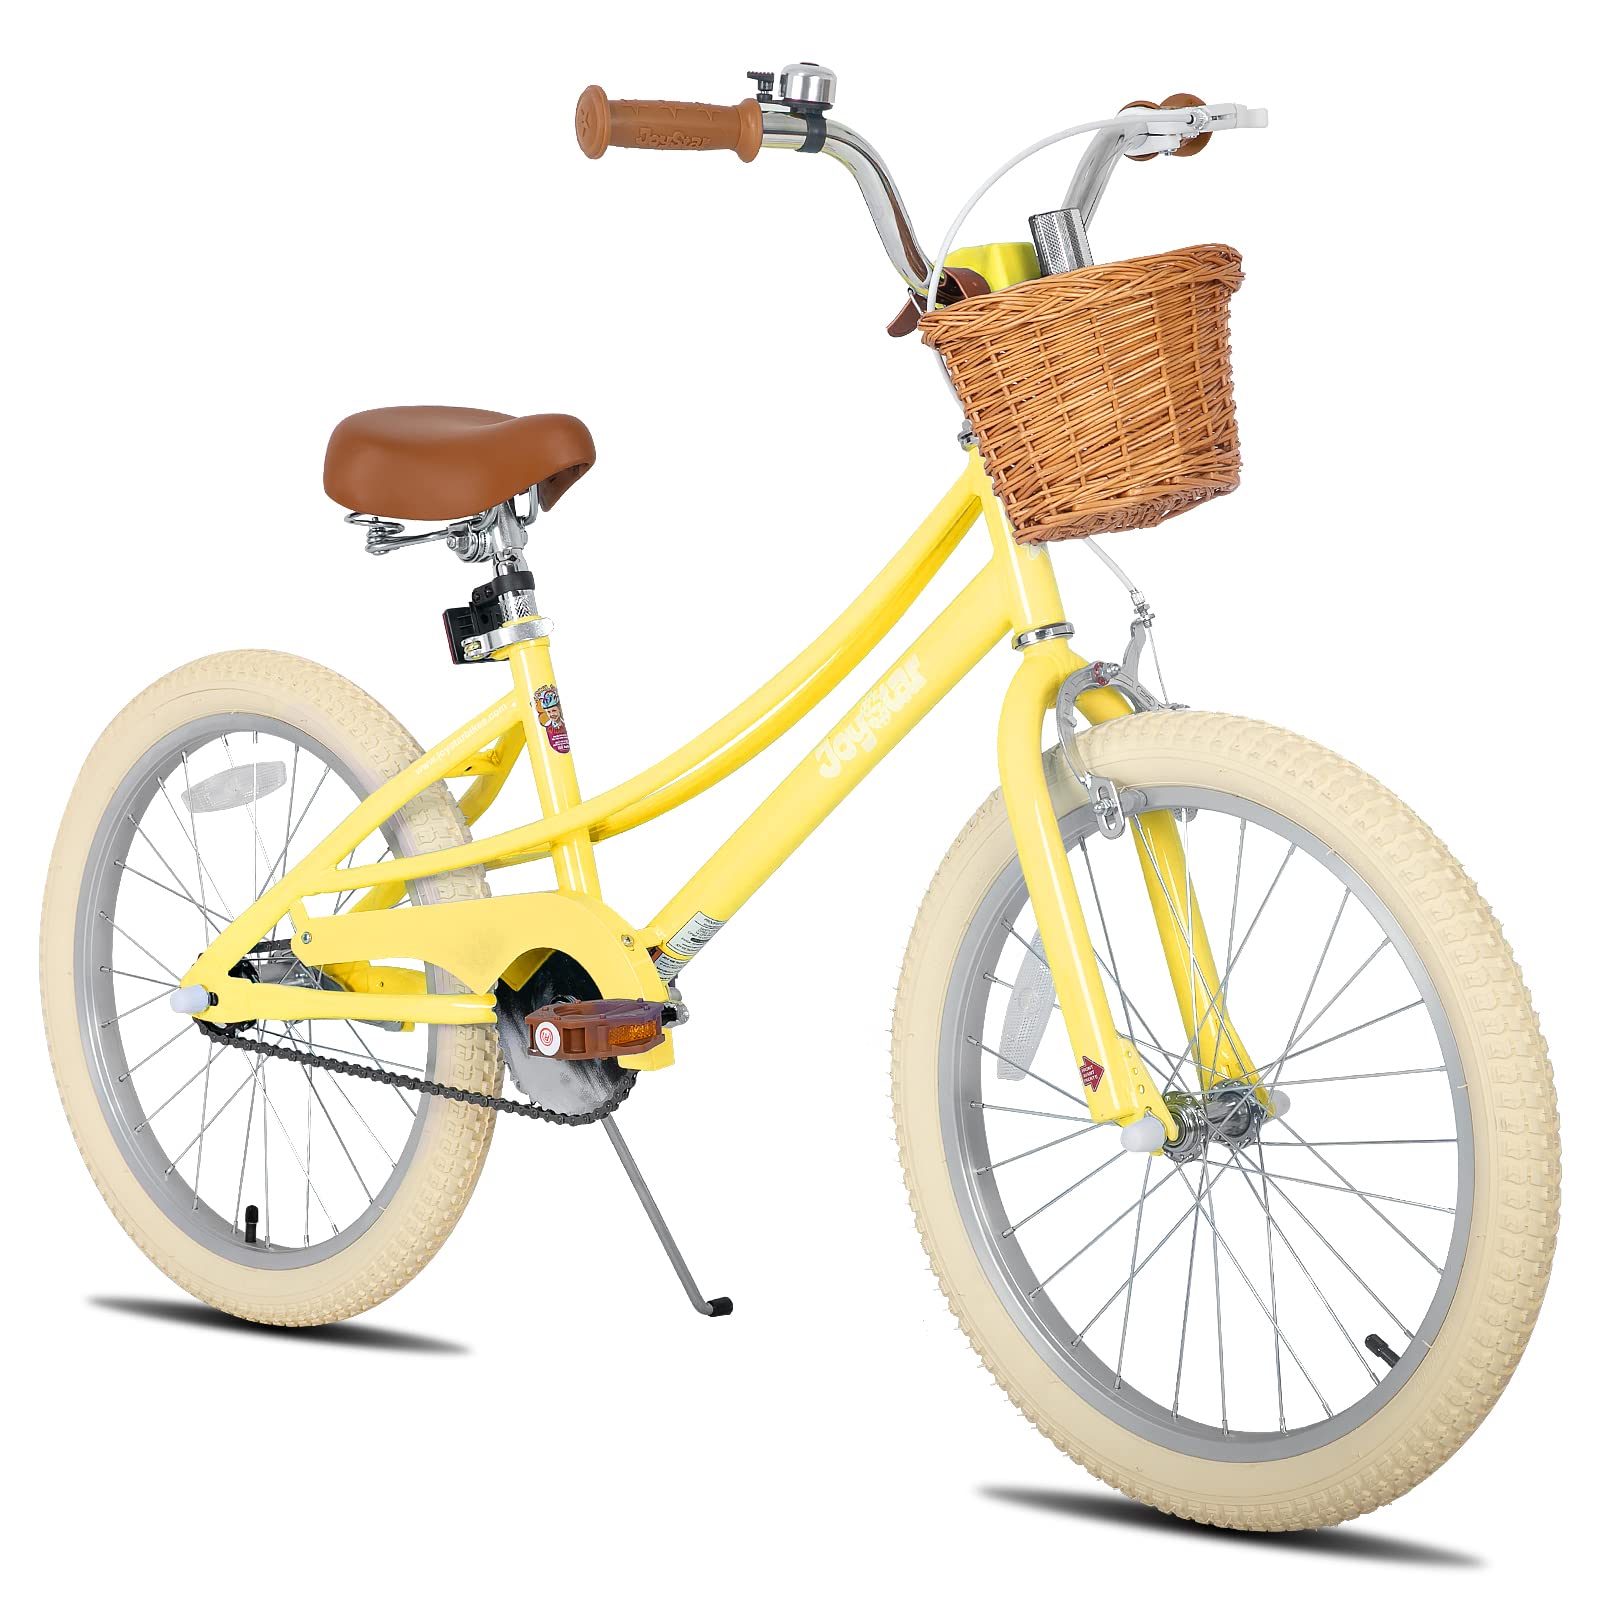 JOYSTAR 20 inch Kids Bike for 7-10 Years Girls, Girls Bike with Training Wheels & Basket, Kids' Bicycle Yellow